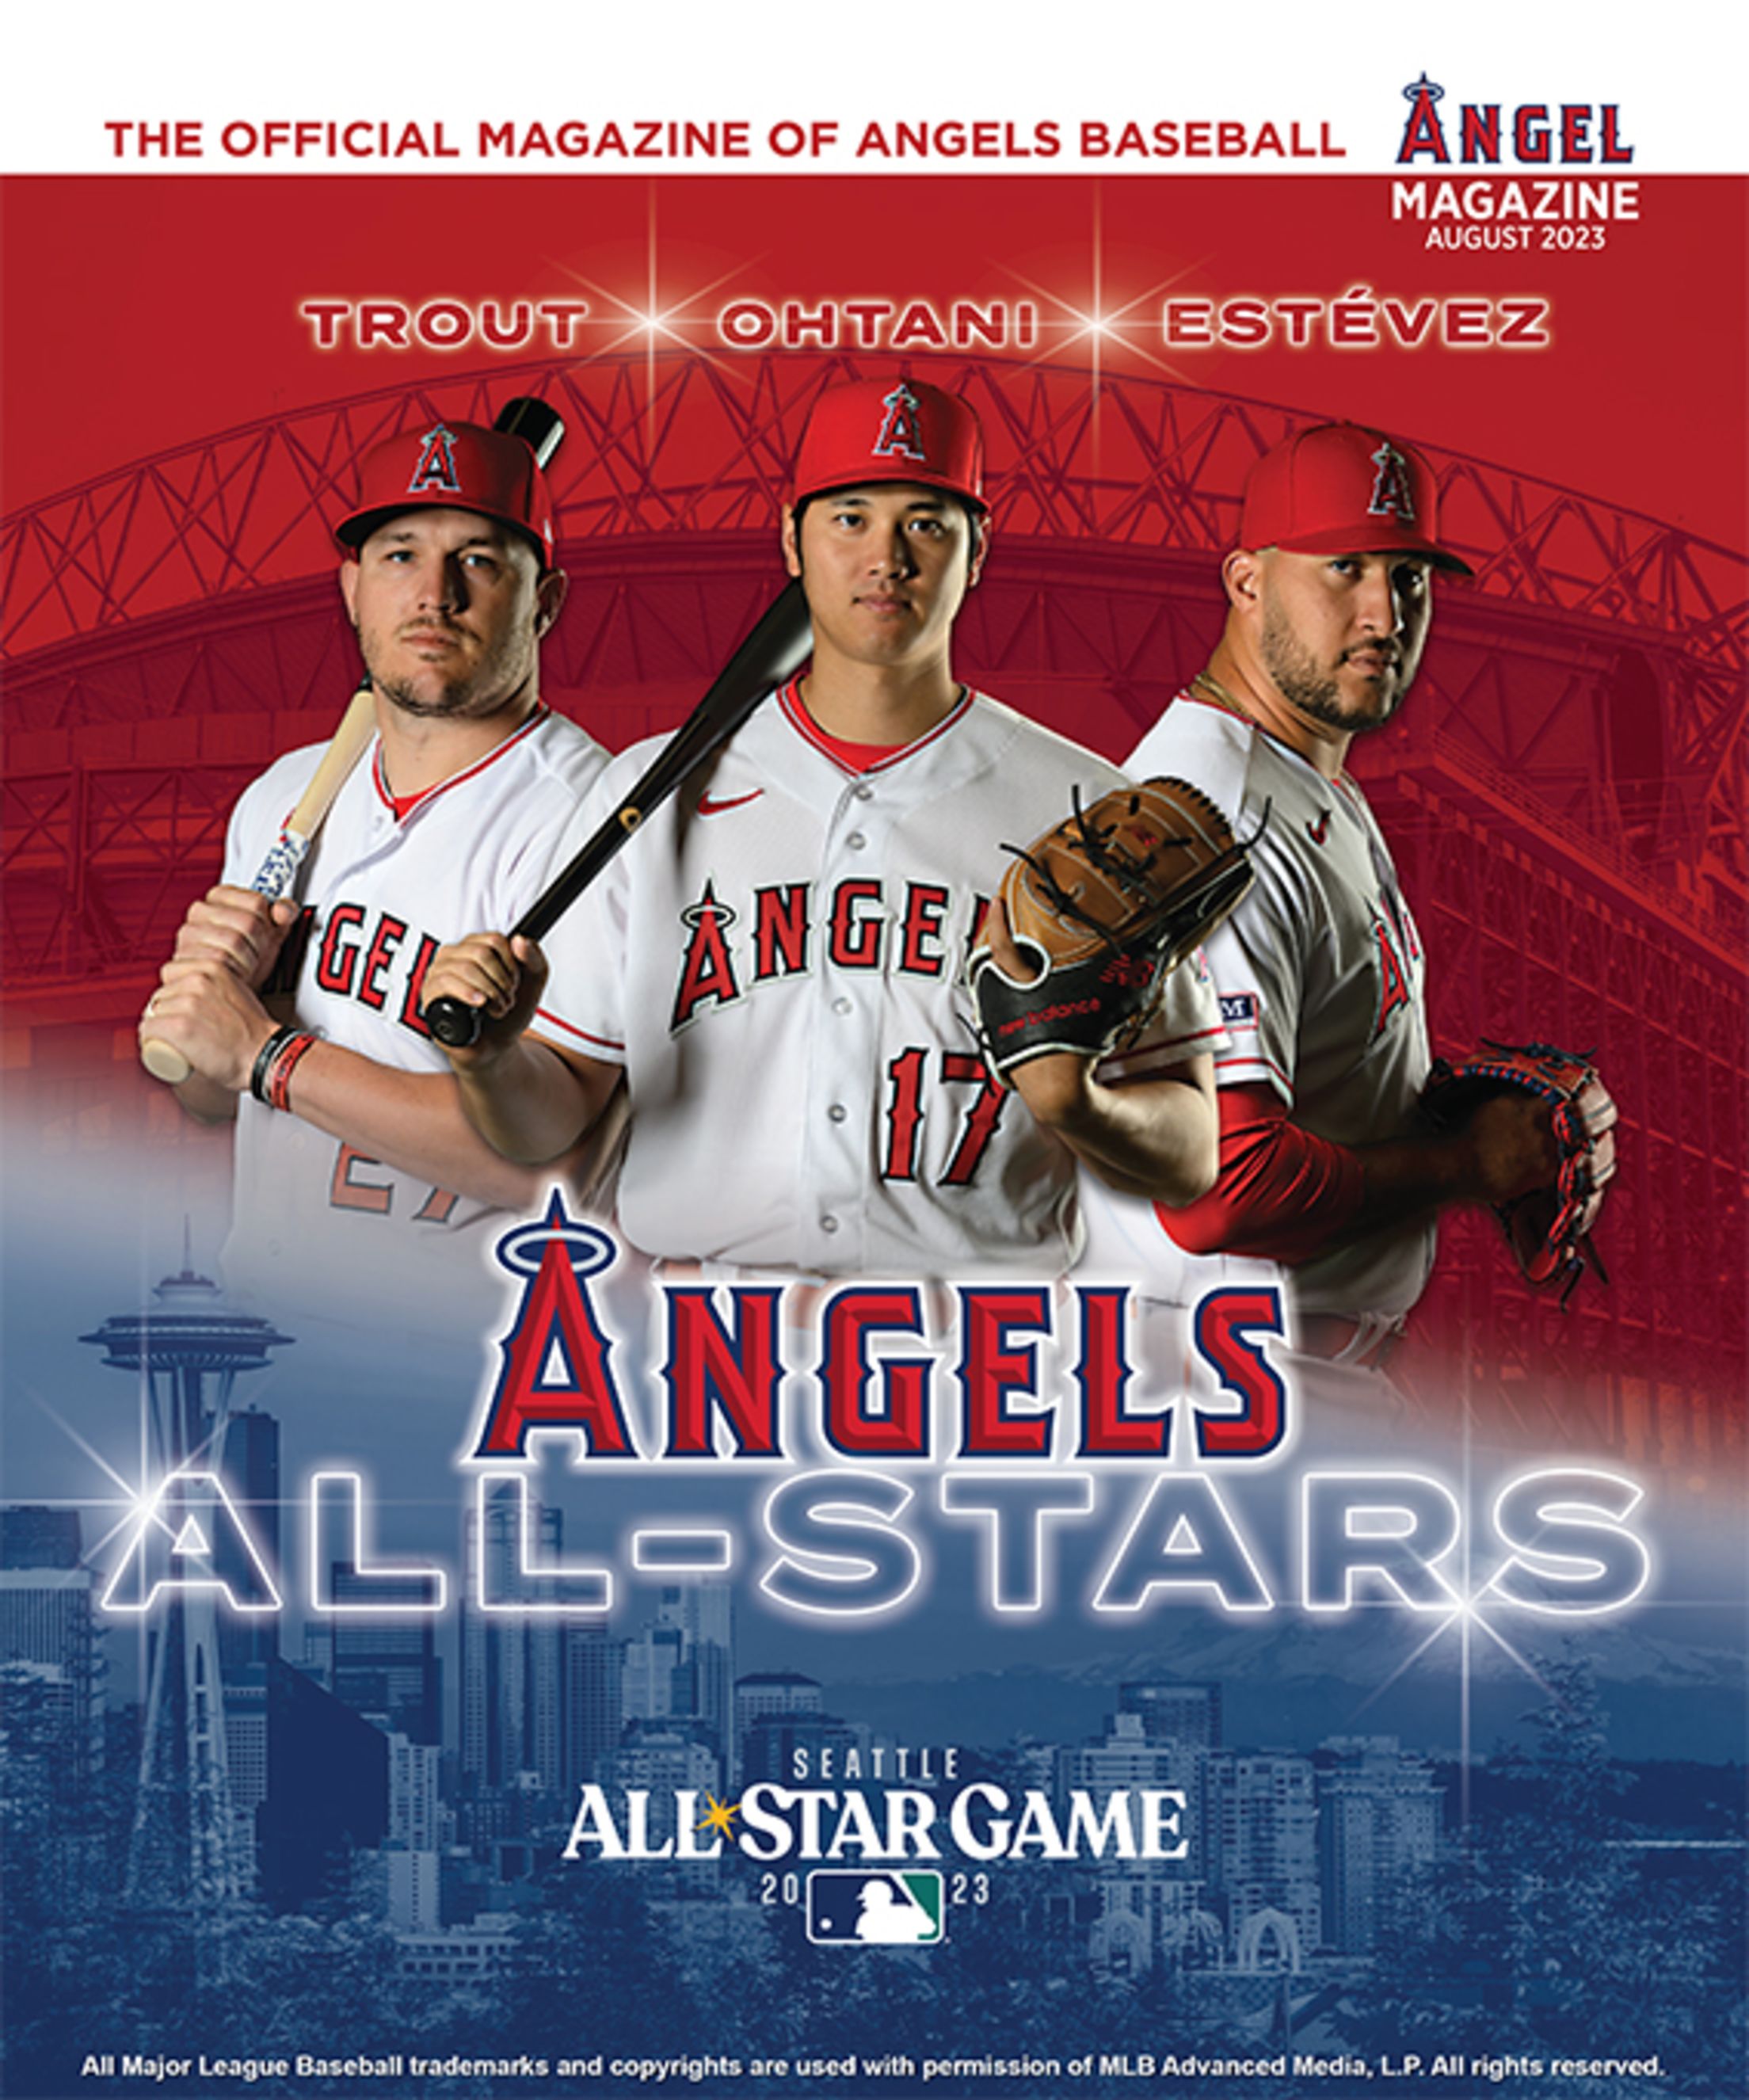 Angel Magazine - The Official Magazine of Angels Baseball